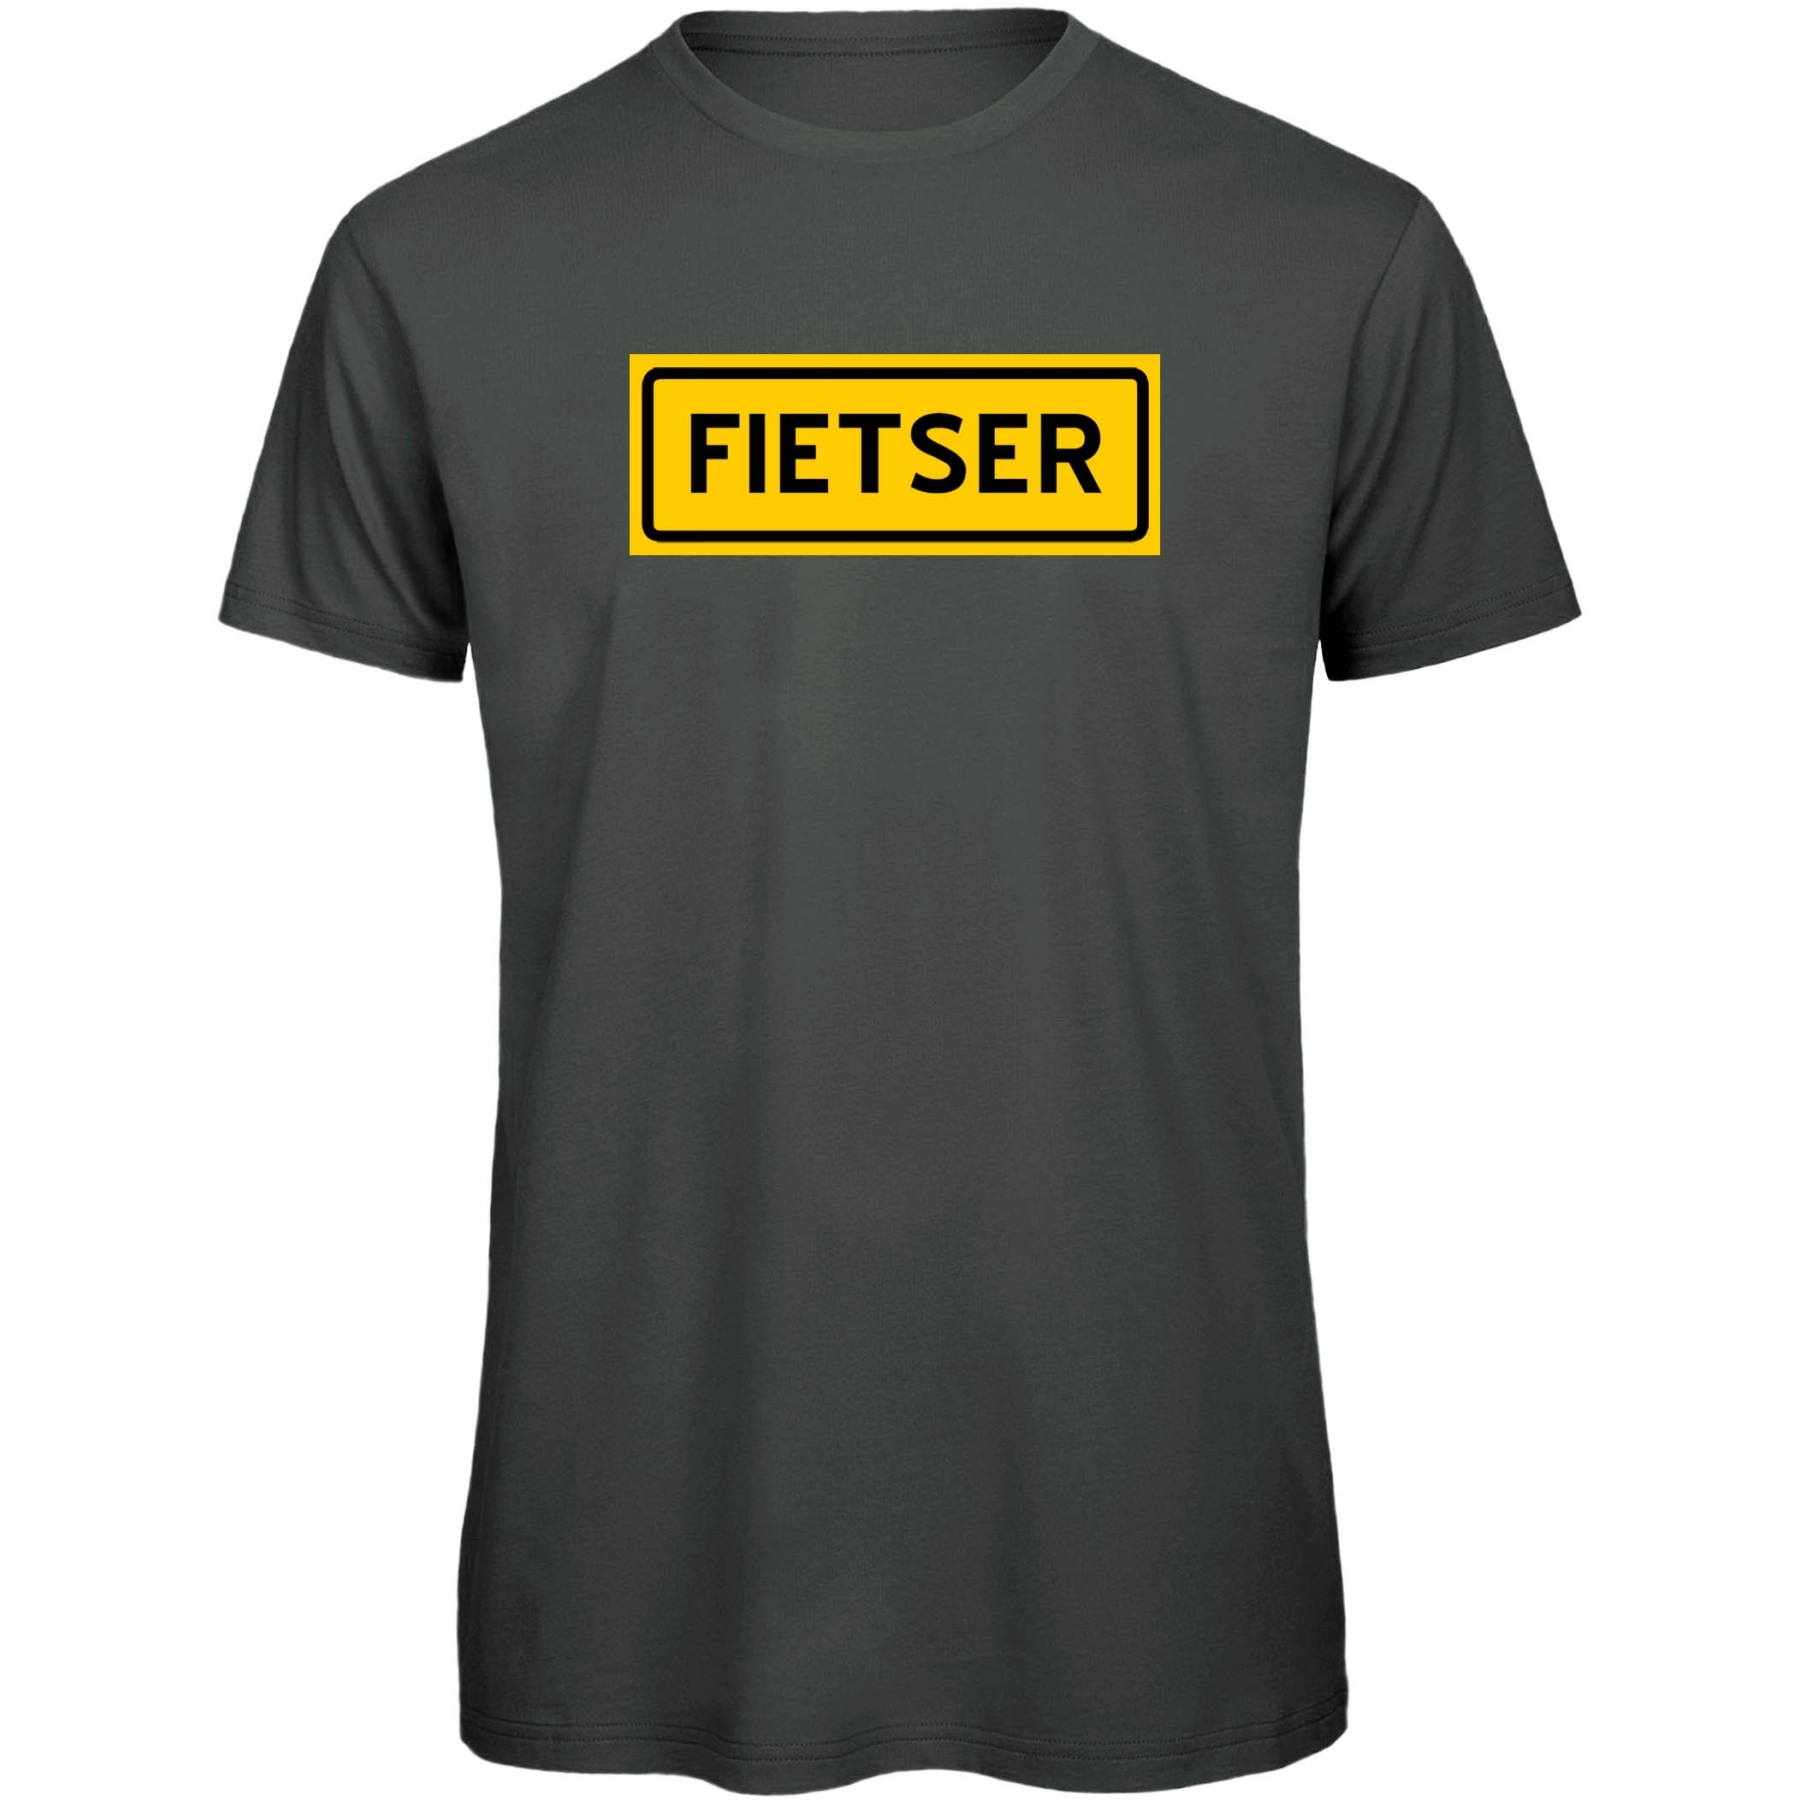 Foto de RTTshirts Camiseta Bicicleta - Fietser - gris oscuro